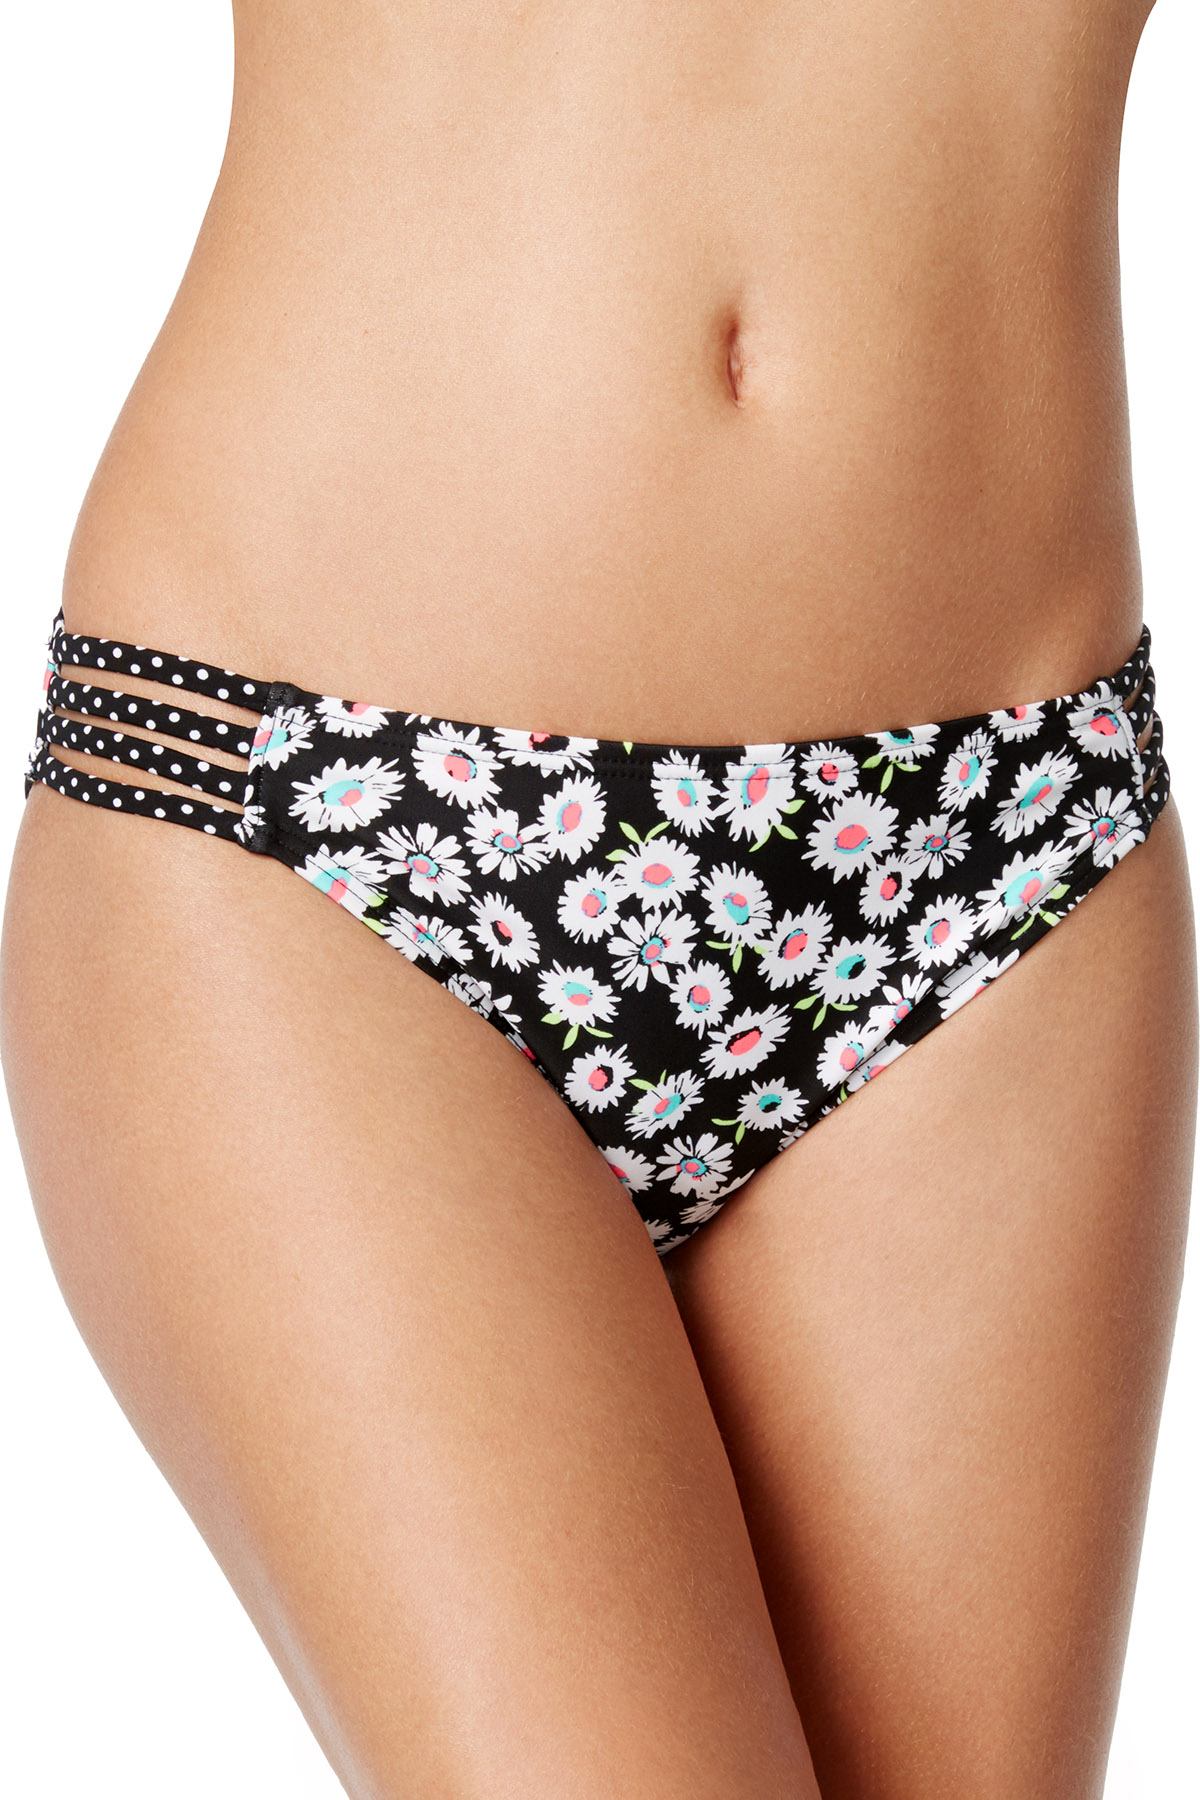 California Waves Daisy Duke Floral Strappy Bikini Bottom in Black/Neon